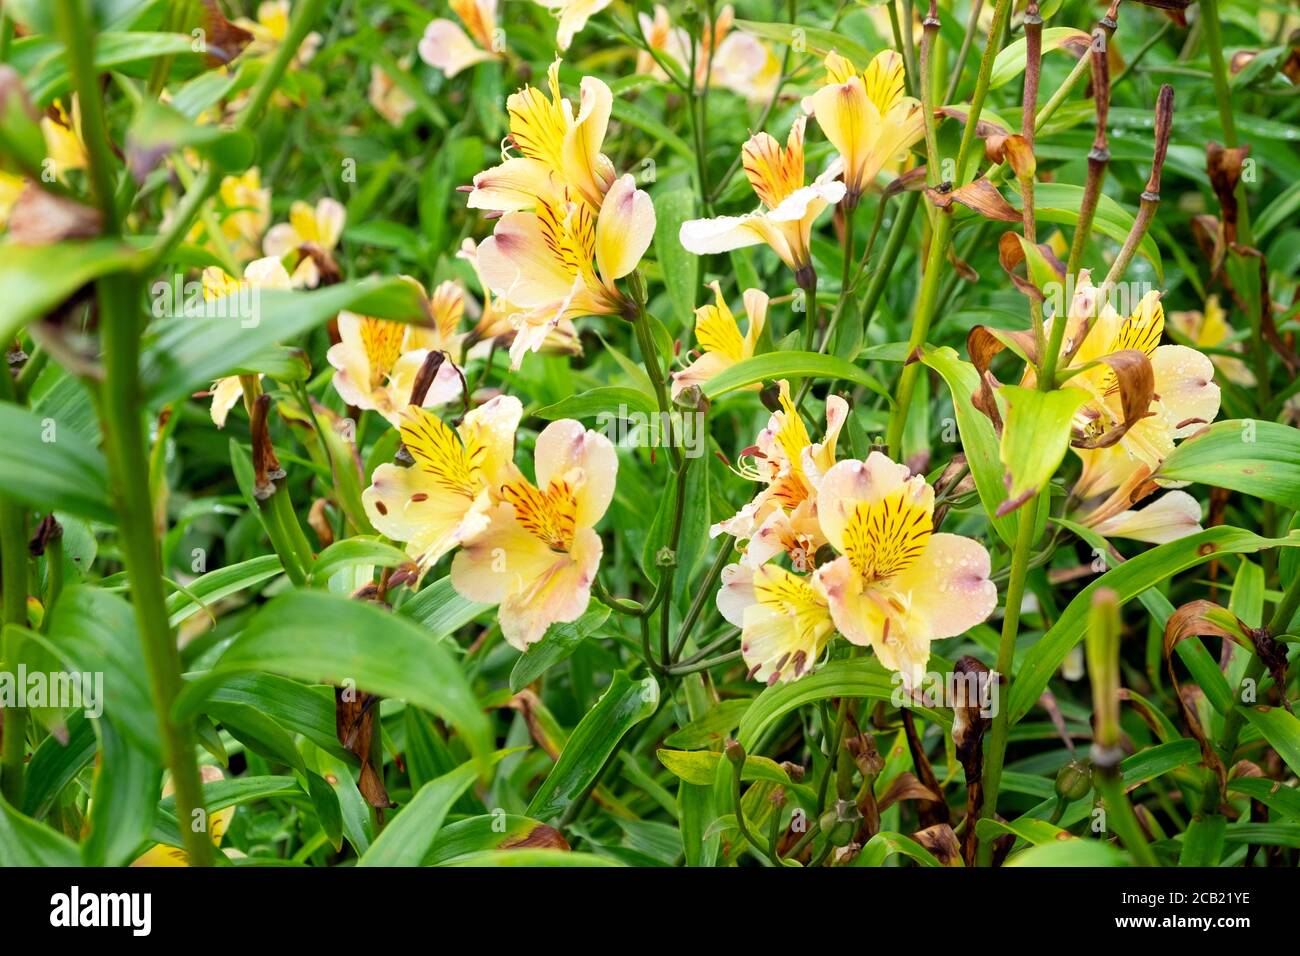 Alstromeria Inticancha Sunliight perennials in bloom herbaceous border at the National Botanic Garden of Wales Carmarthenshire Wales UK KATHY DEWITT Stock Photo